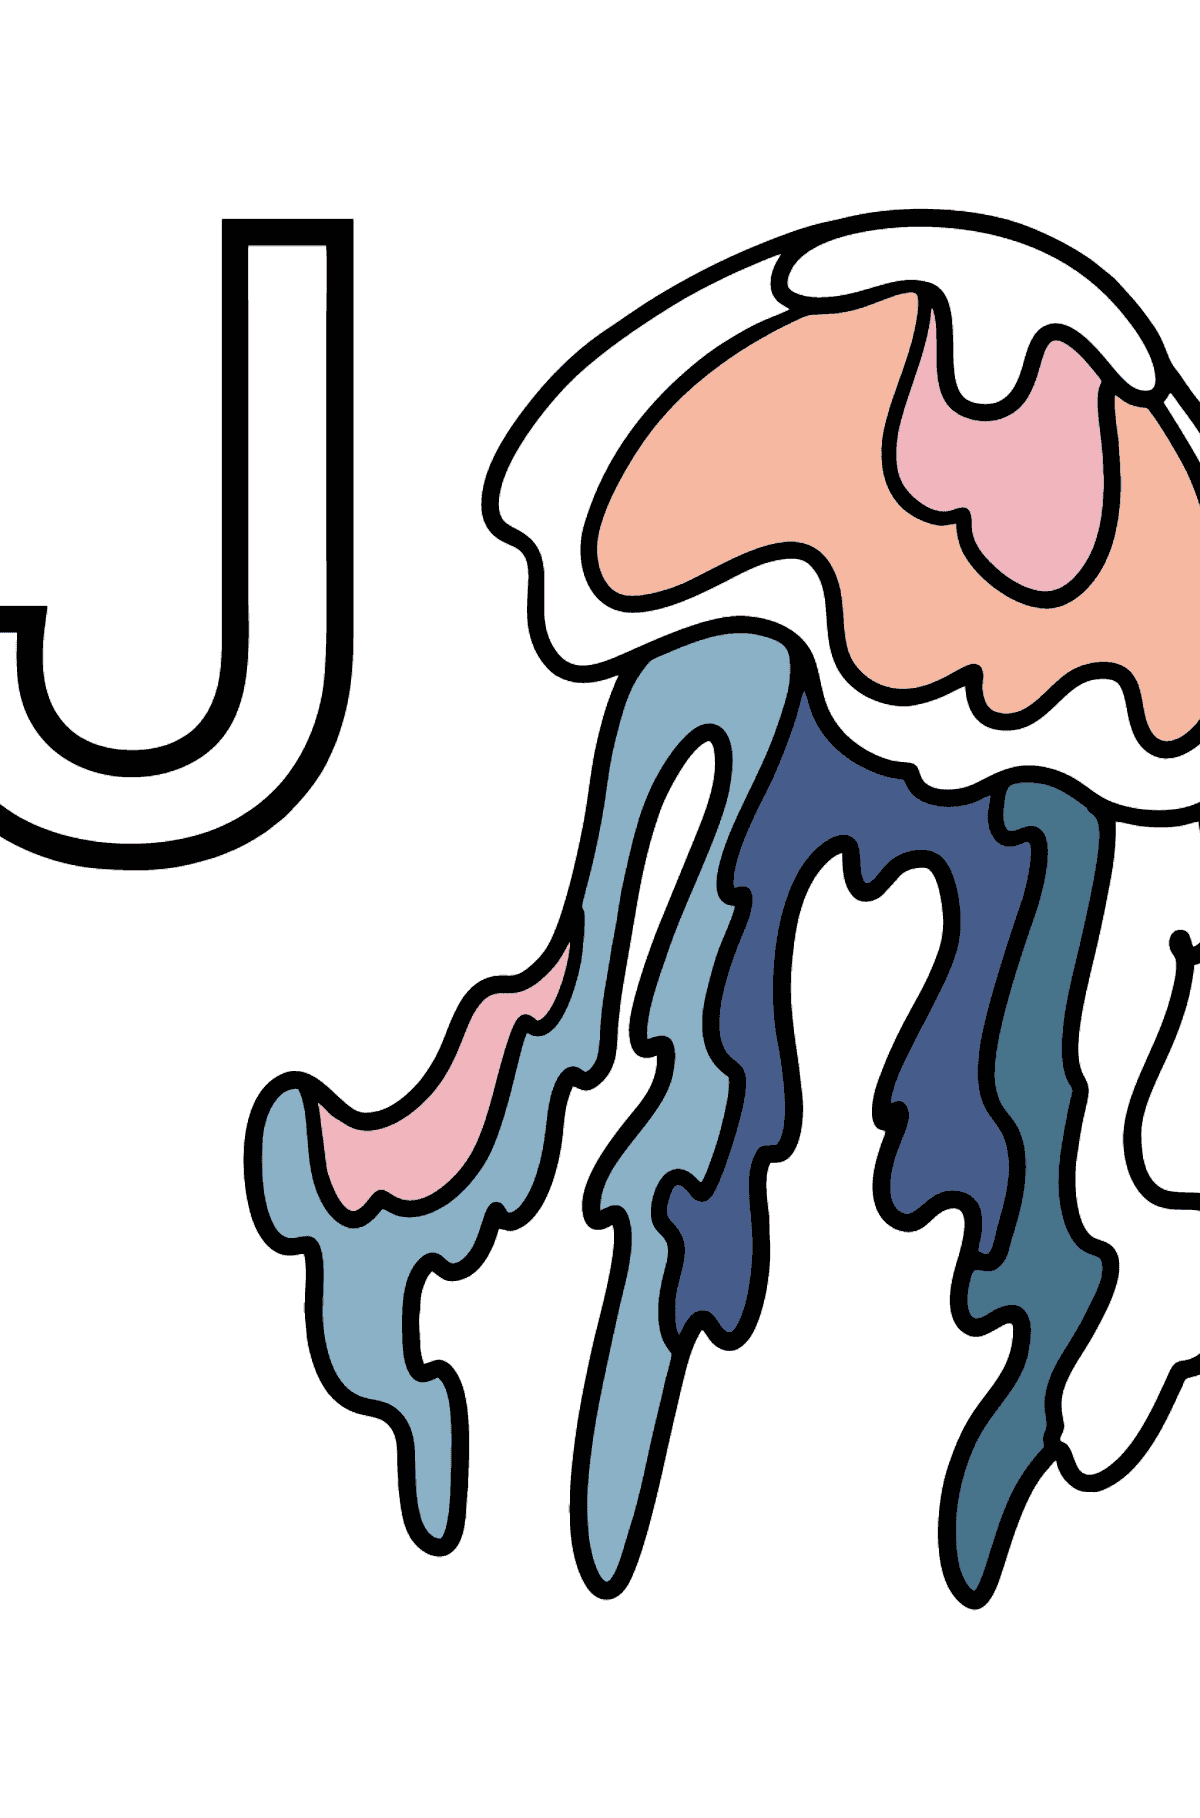 Dibujo de Letra J inglesa para colorear - JELLYFISH - Dibujos para Colorear para Niños